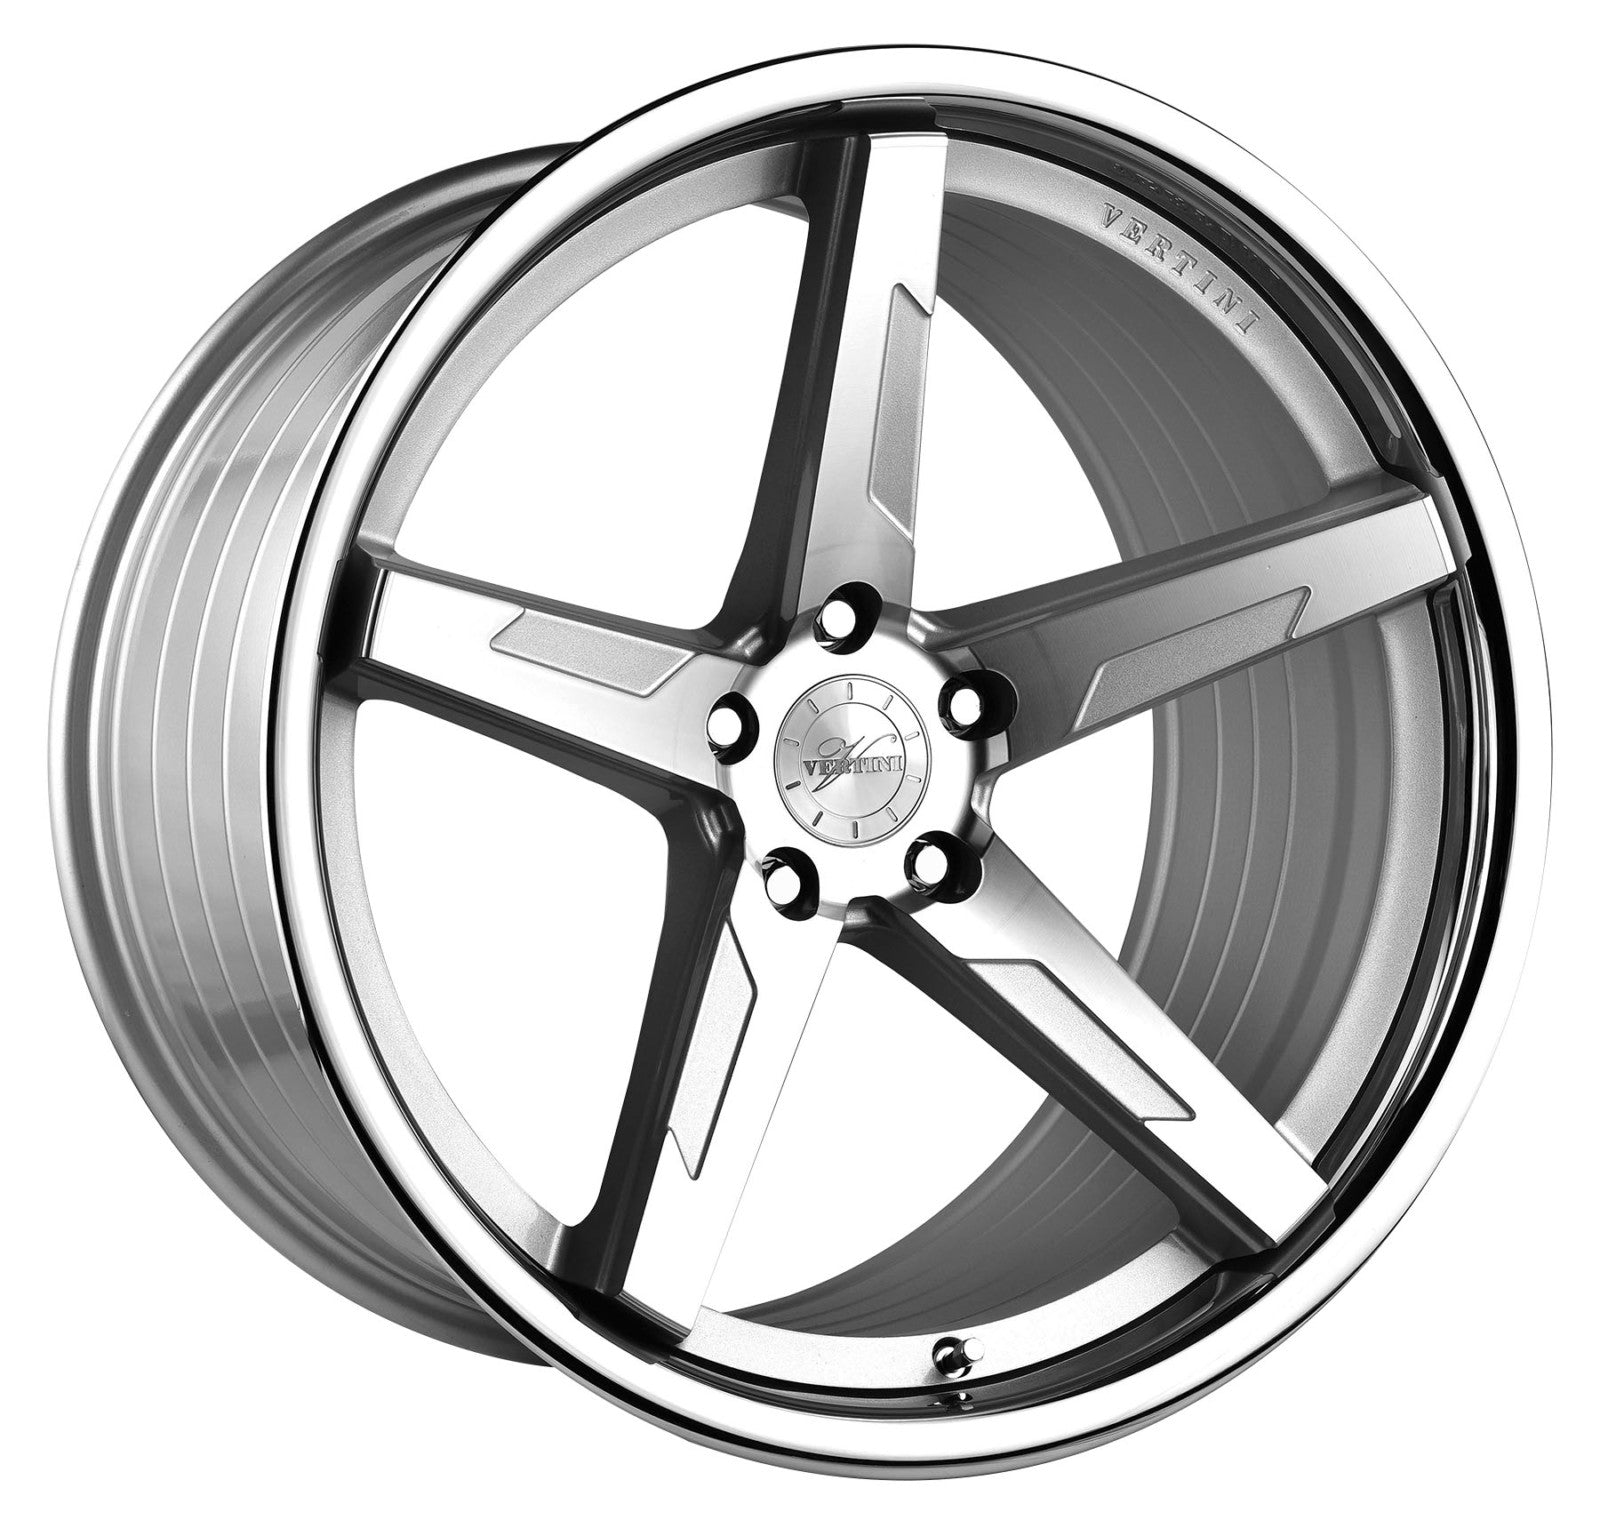 19” Vertini RFS1.7 Machined Silver Wheels - Set of 4 - Motorsports LA